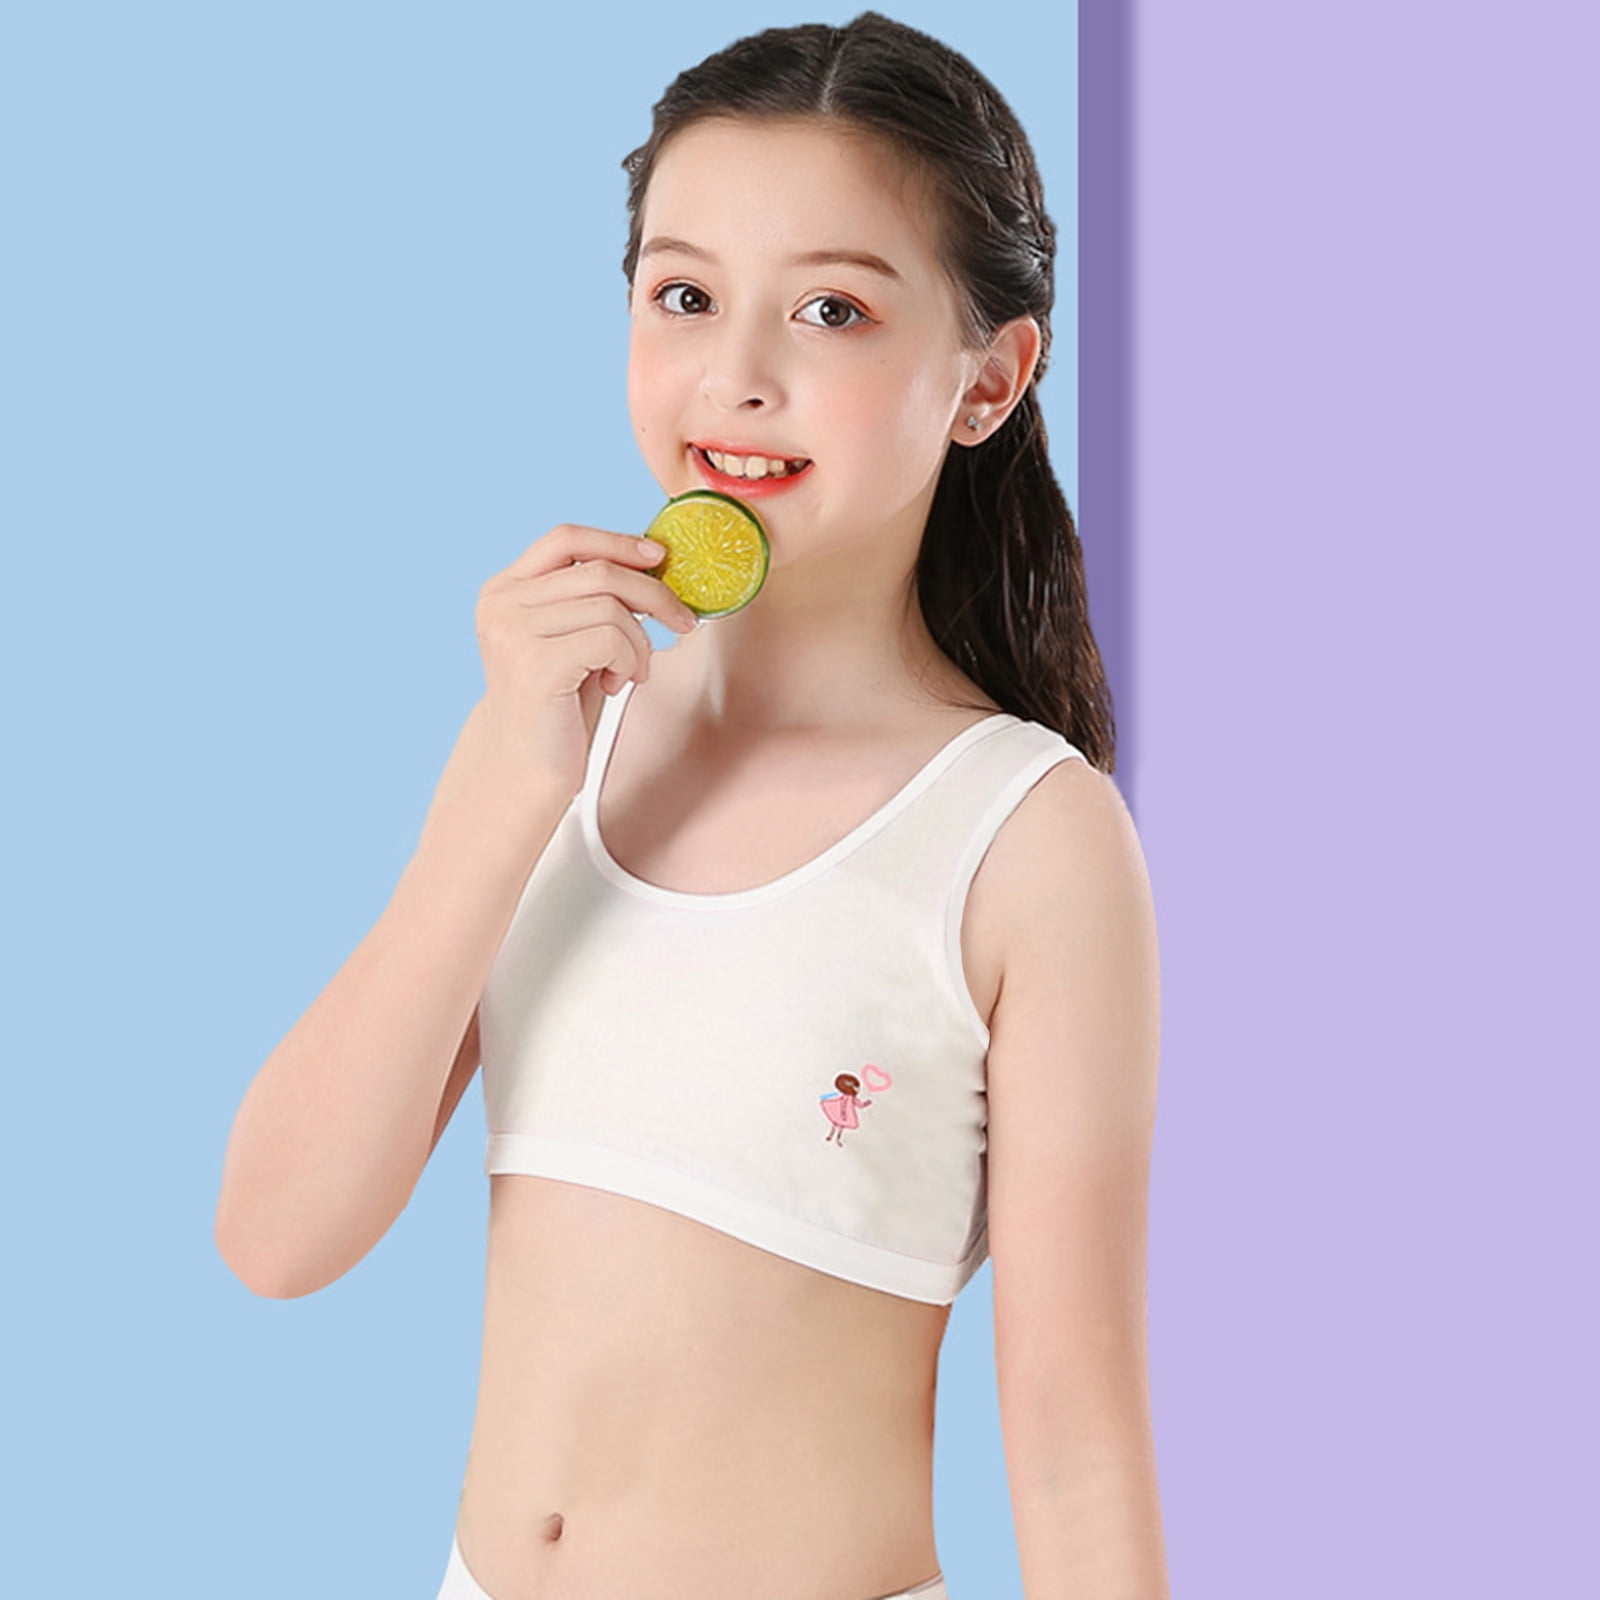 Clearance Sales! Zpanxa Bras for Women Kids Girls Underwear Cotton